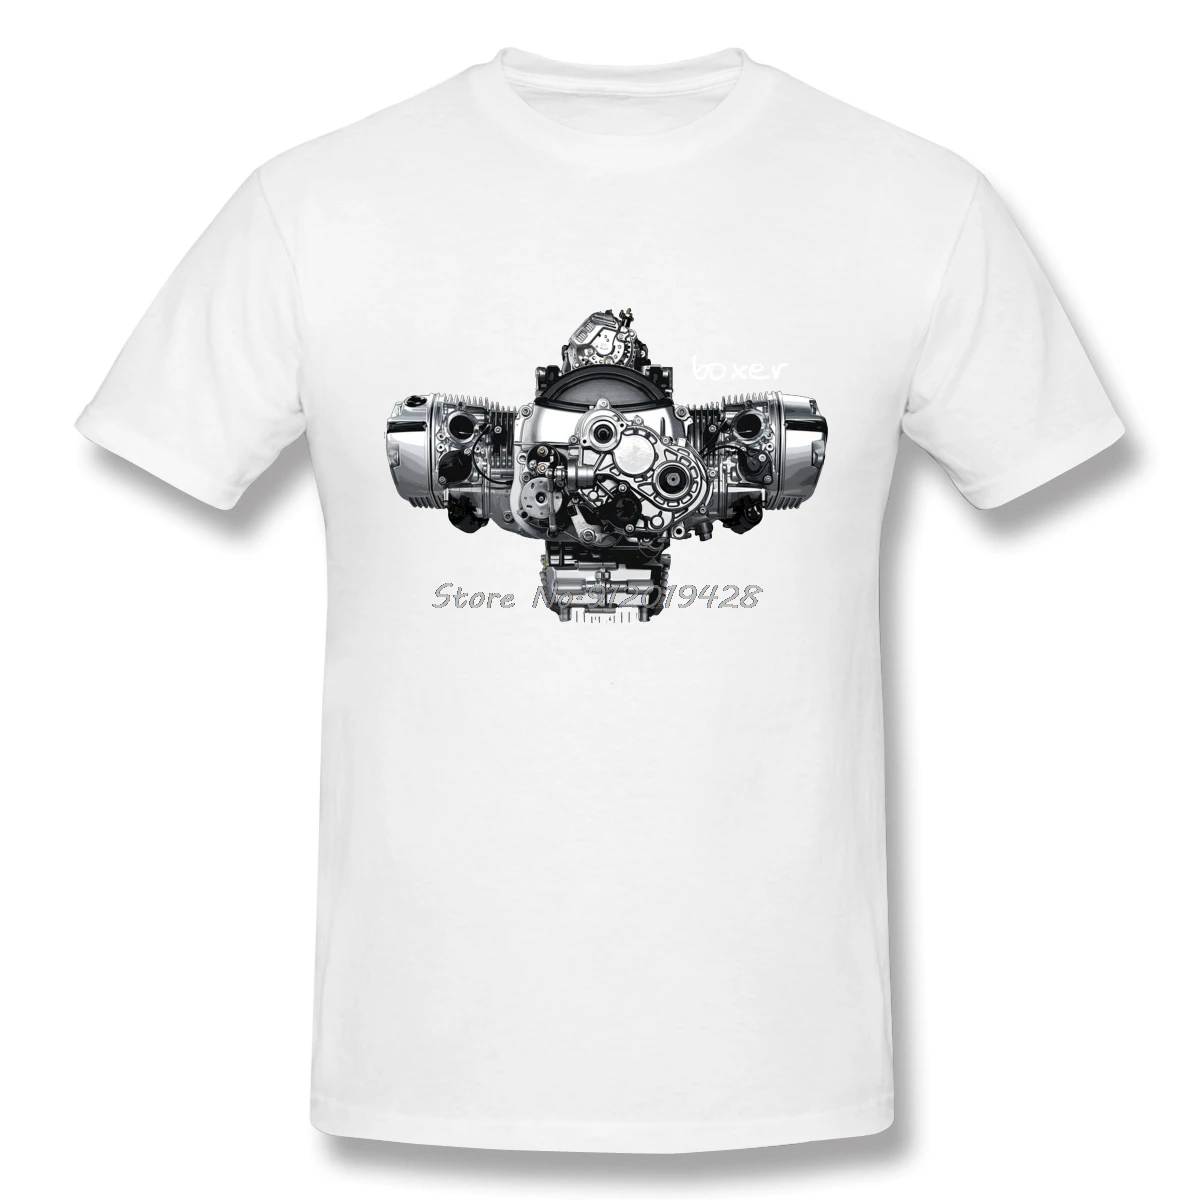 Мужские летние хлопковые футболки Boxer Engine R1200gs 1200 Gs R Adventure R1200rt R1200r | Мужская одежда